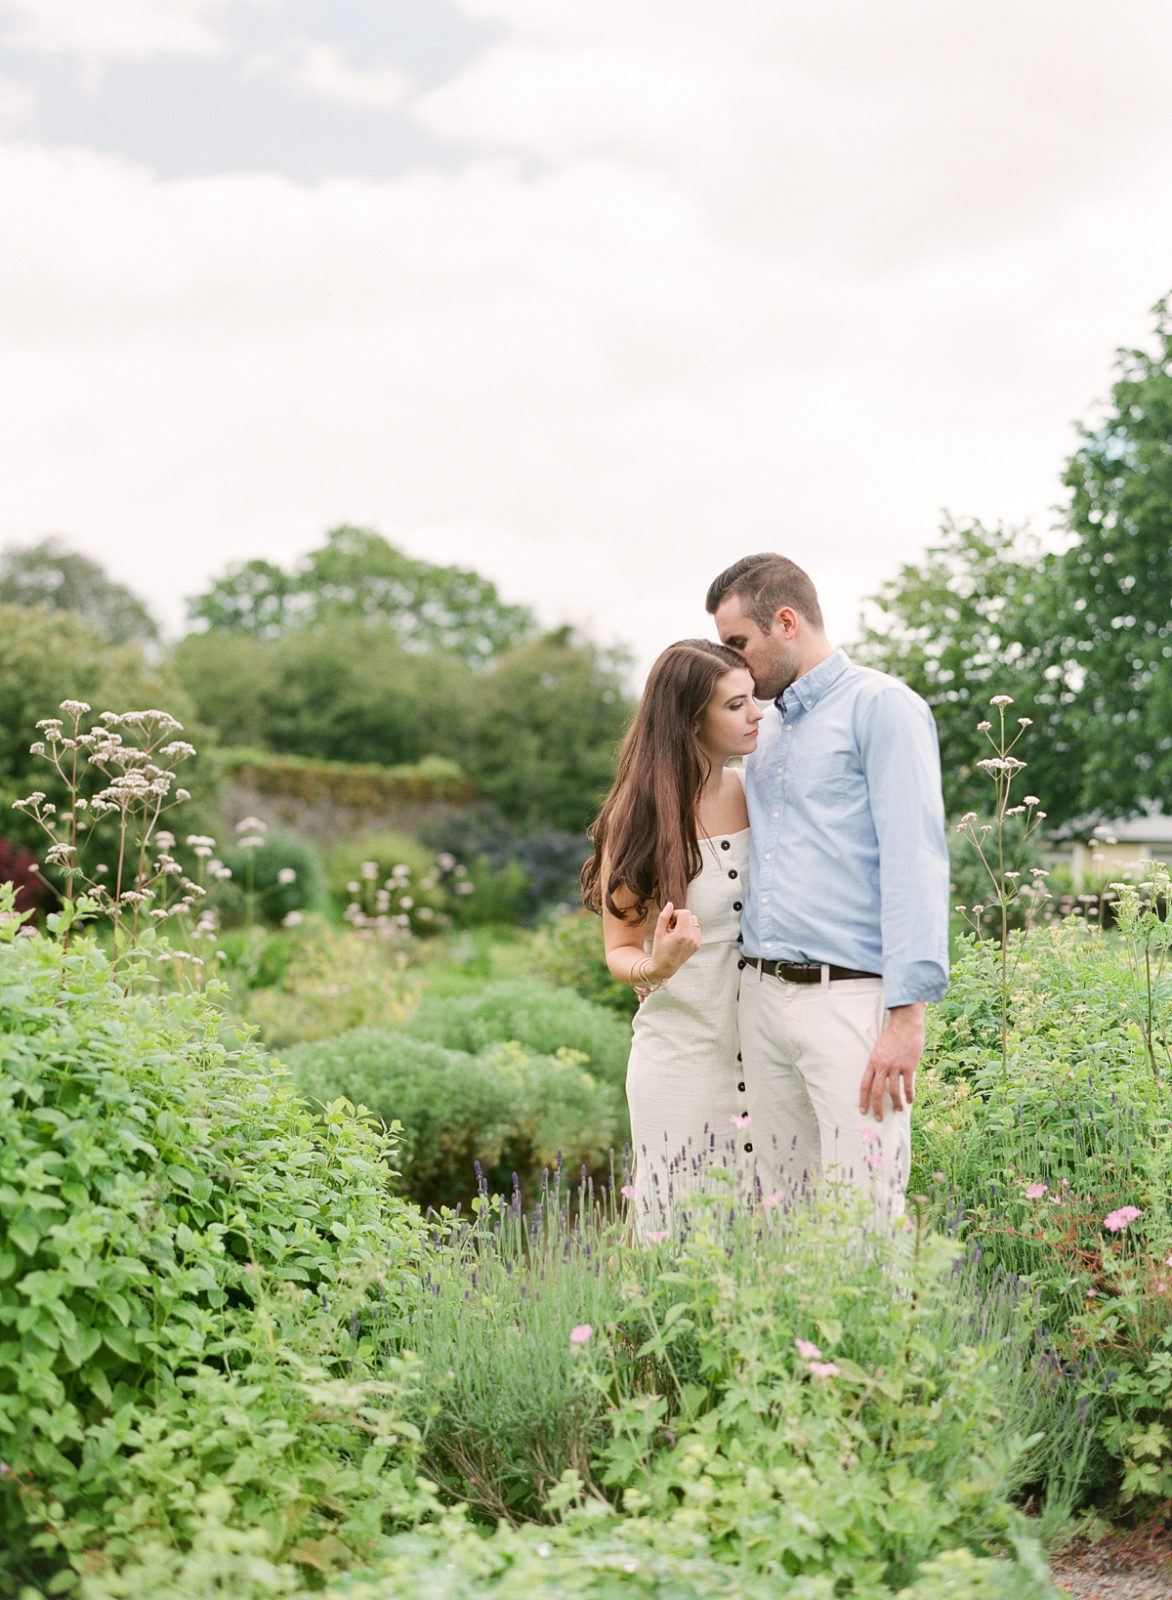 Mount Juliet Estate Wedding Photographer | Ireland Destination Wedding | Molly Carr Photography | Europe Film Photographer | Waterlily Weddings | Pre-Wedding Session | Engagement Photos